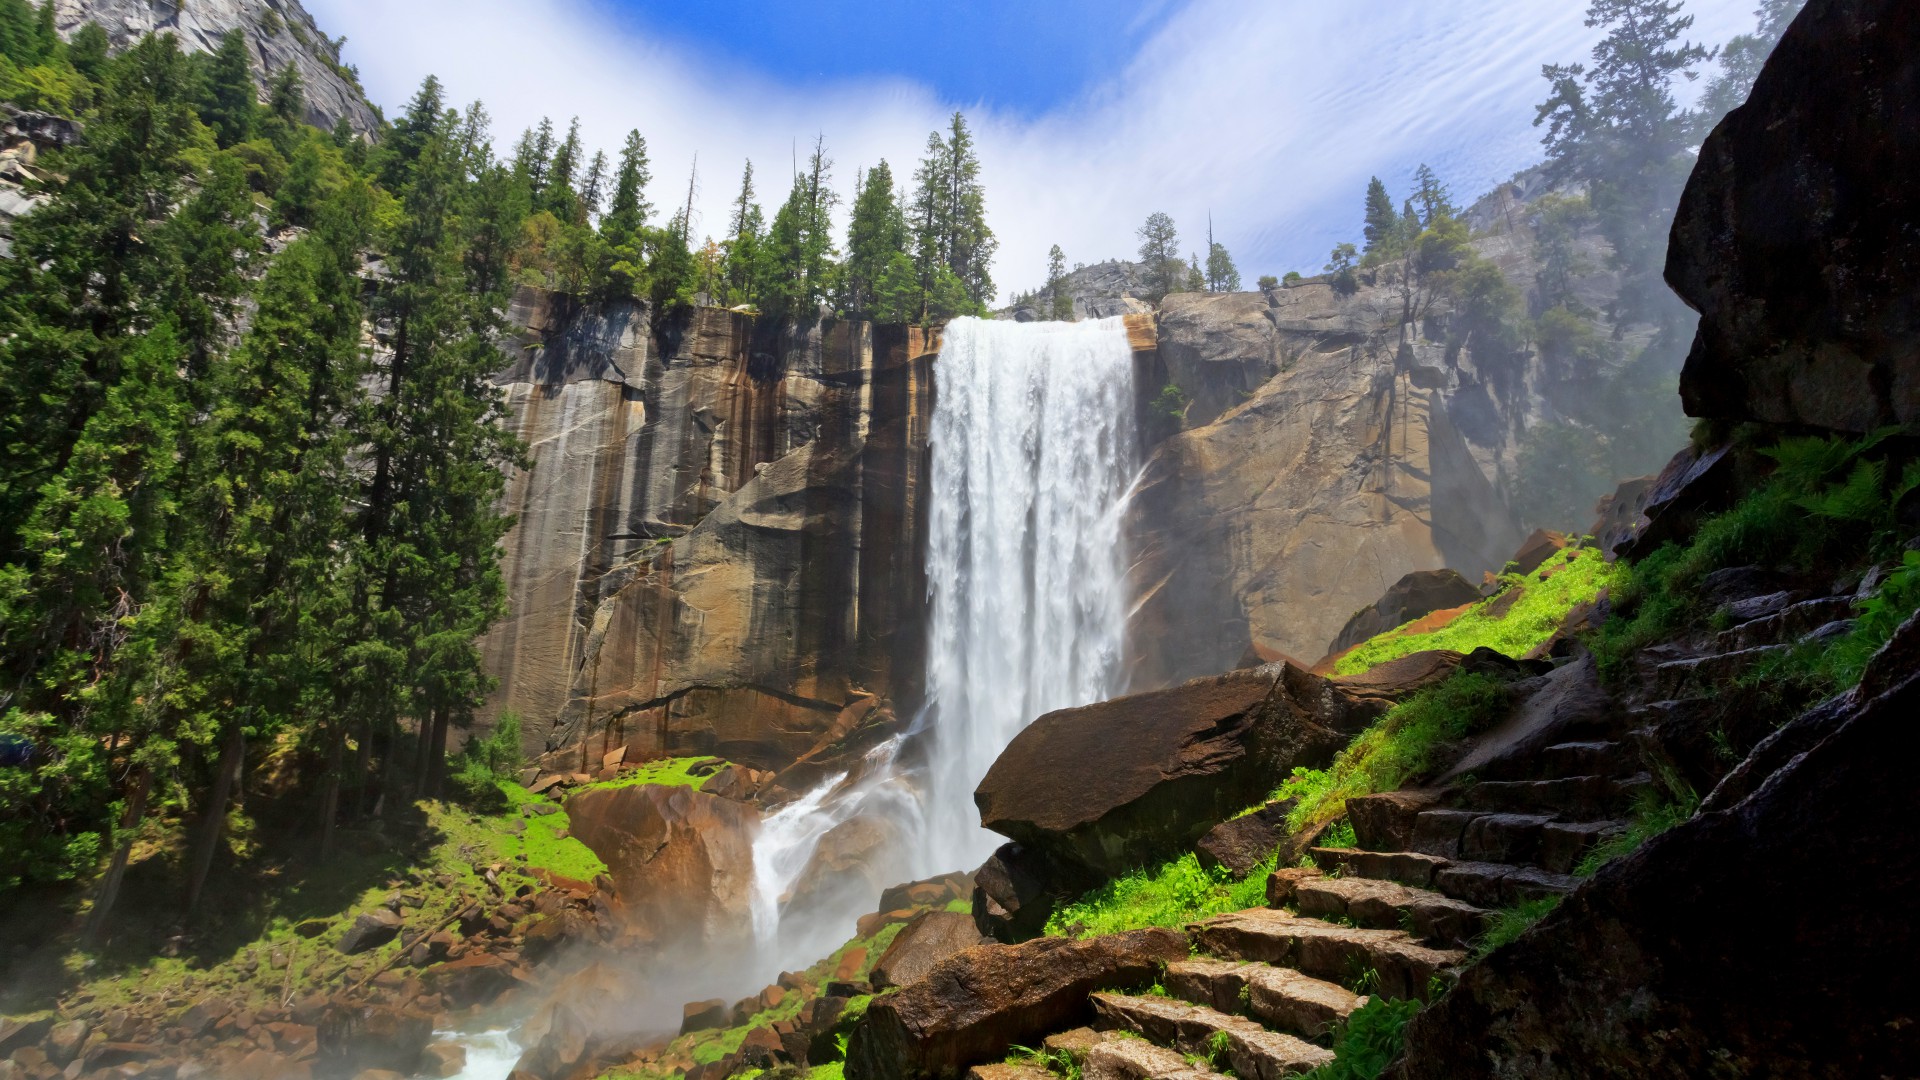 Yosemite, 5k, 4k wallpaper, forest, OSX, apple, mountains (horizontal)